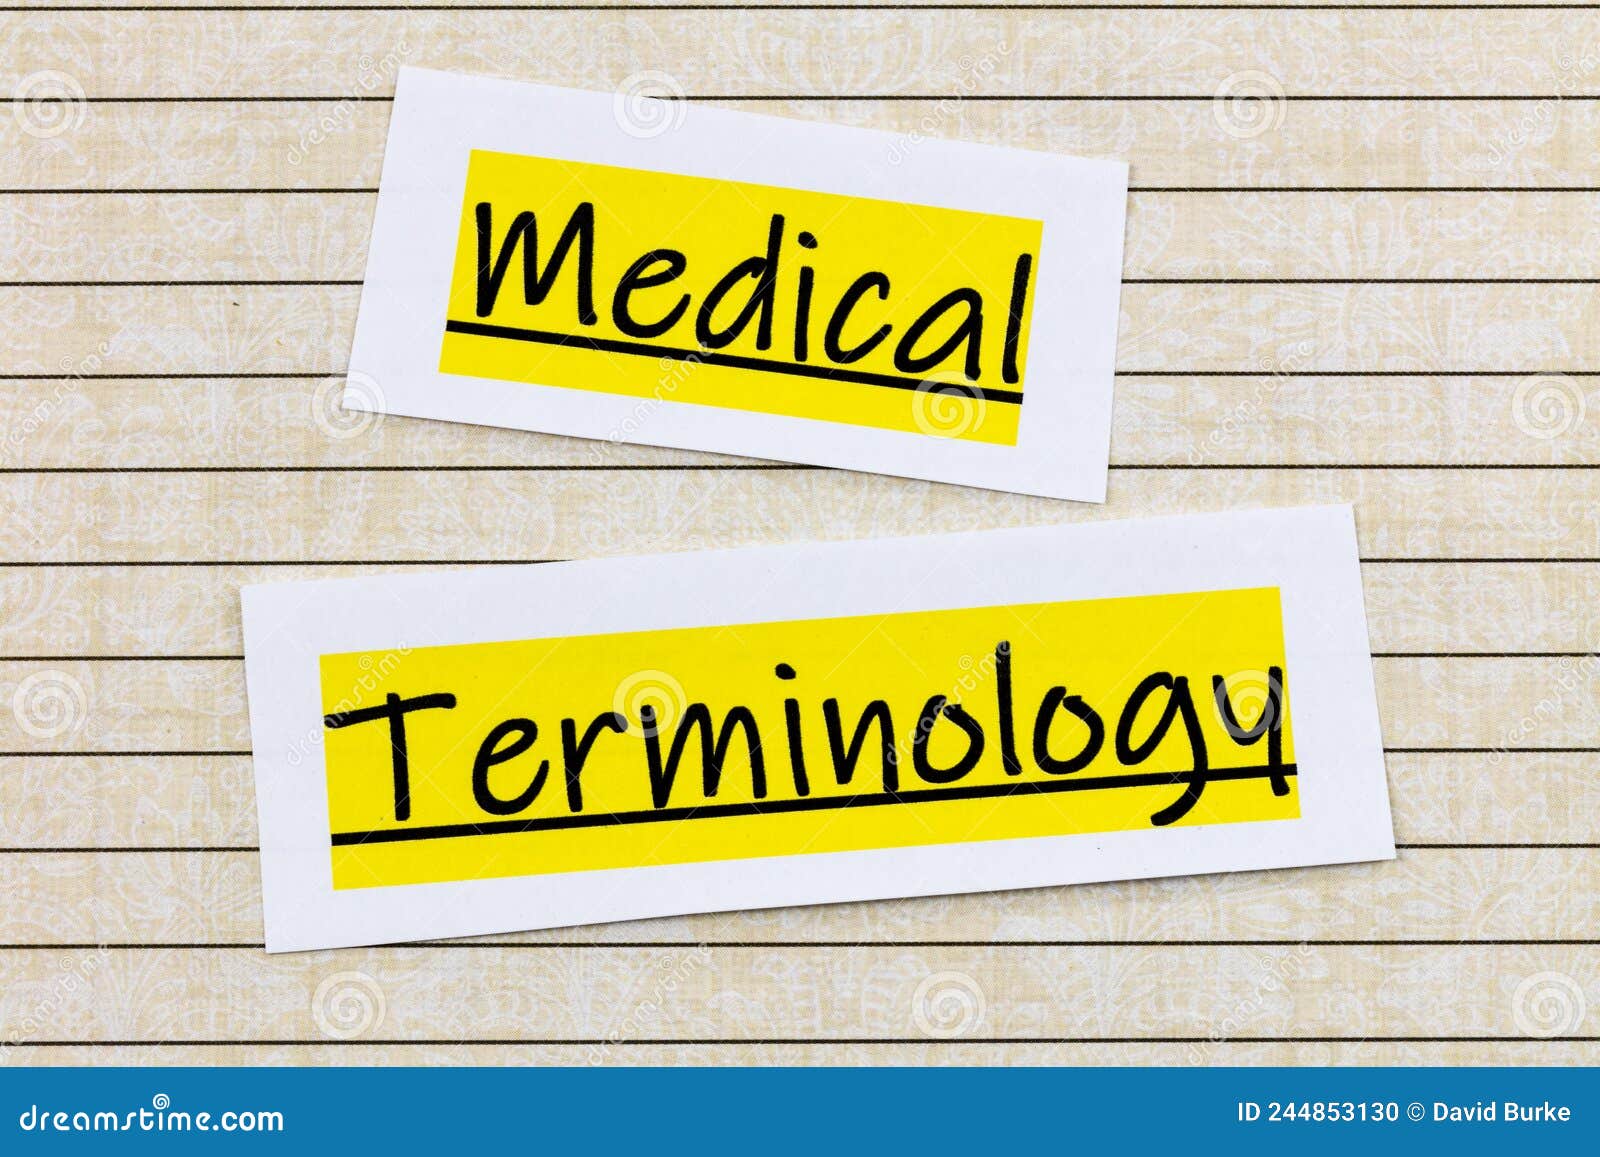 medical terminology knowledge language insurance coding health medicine